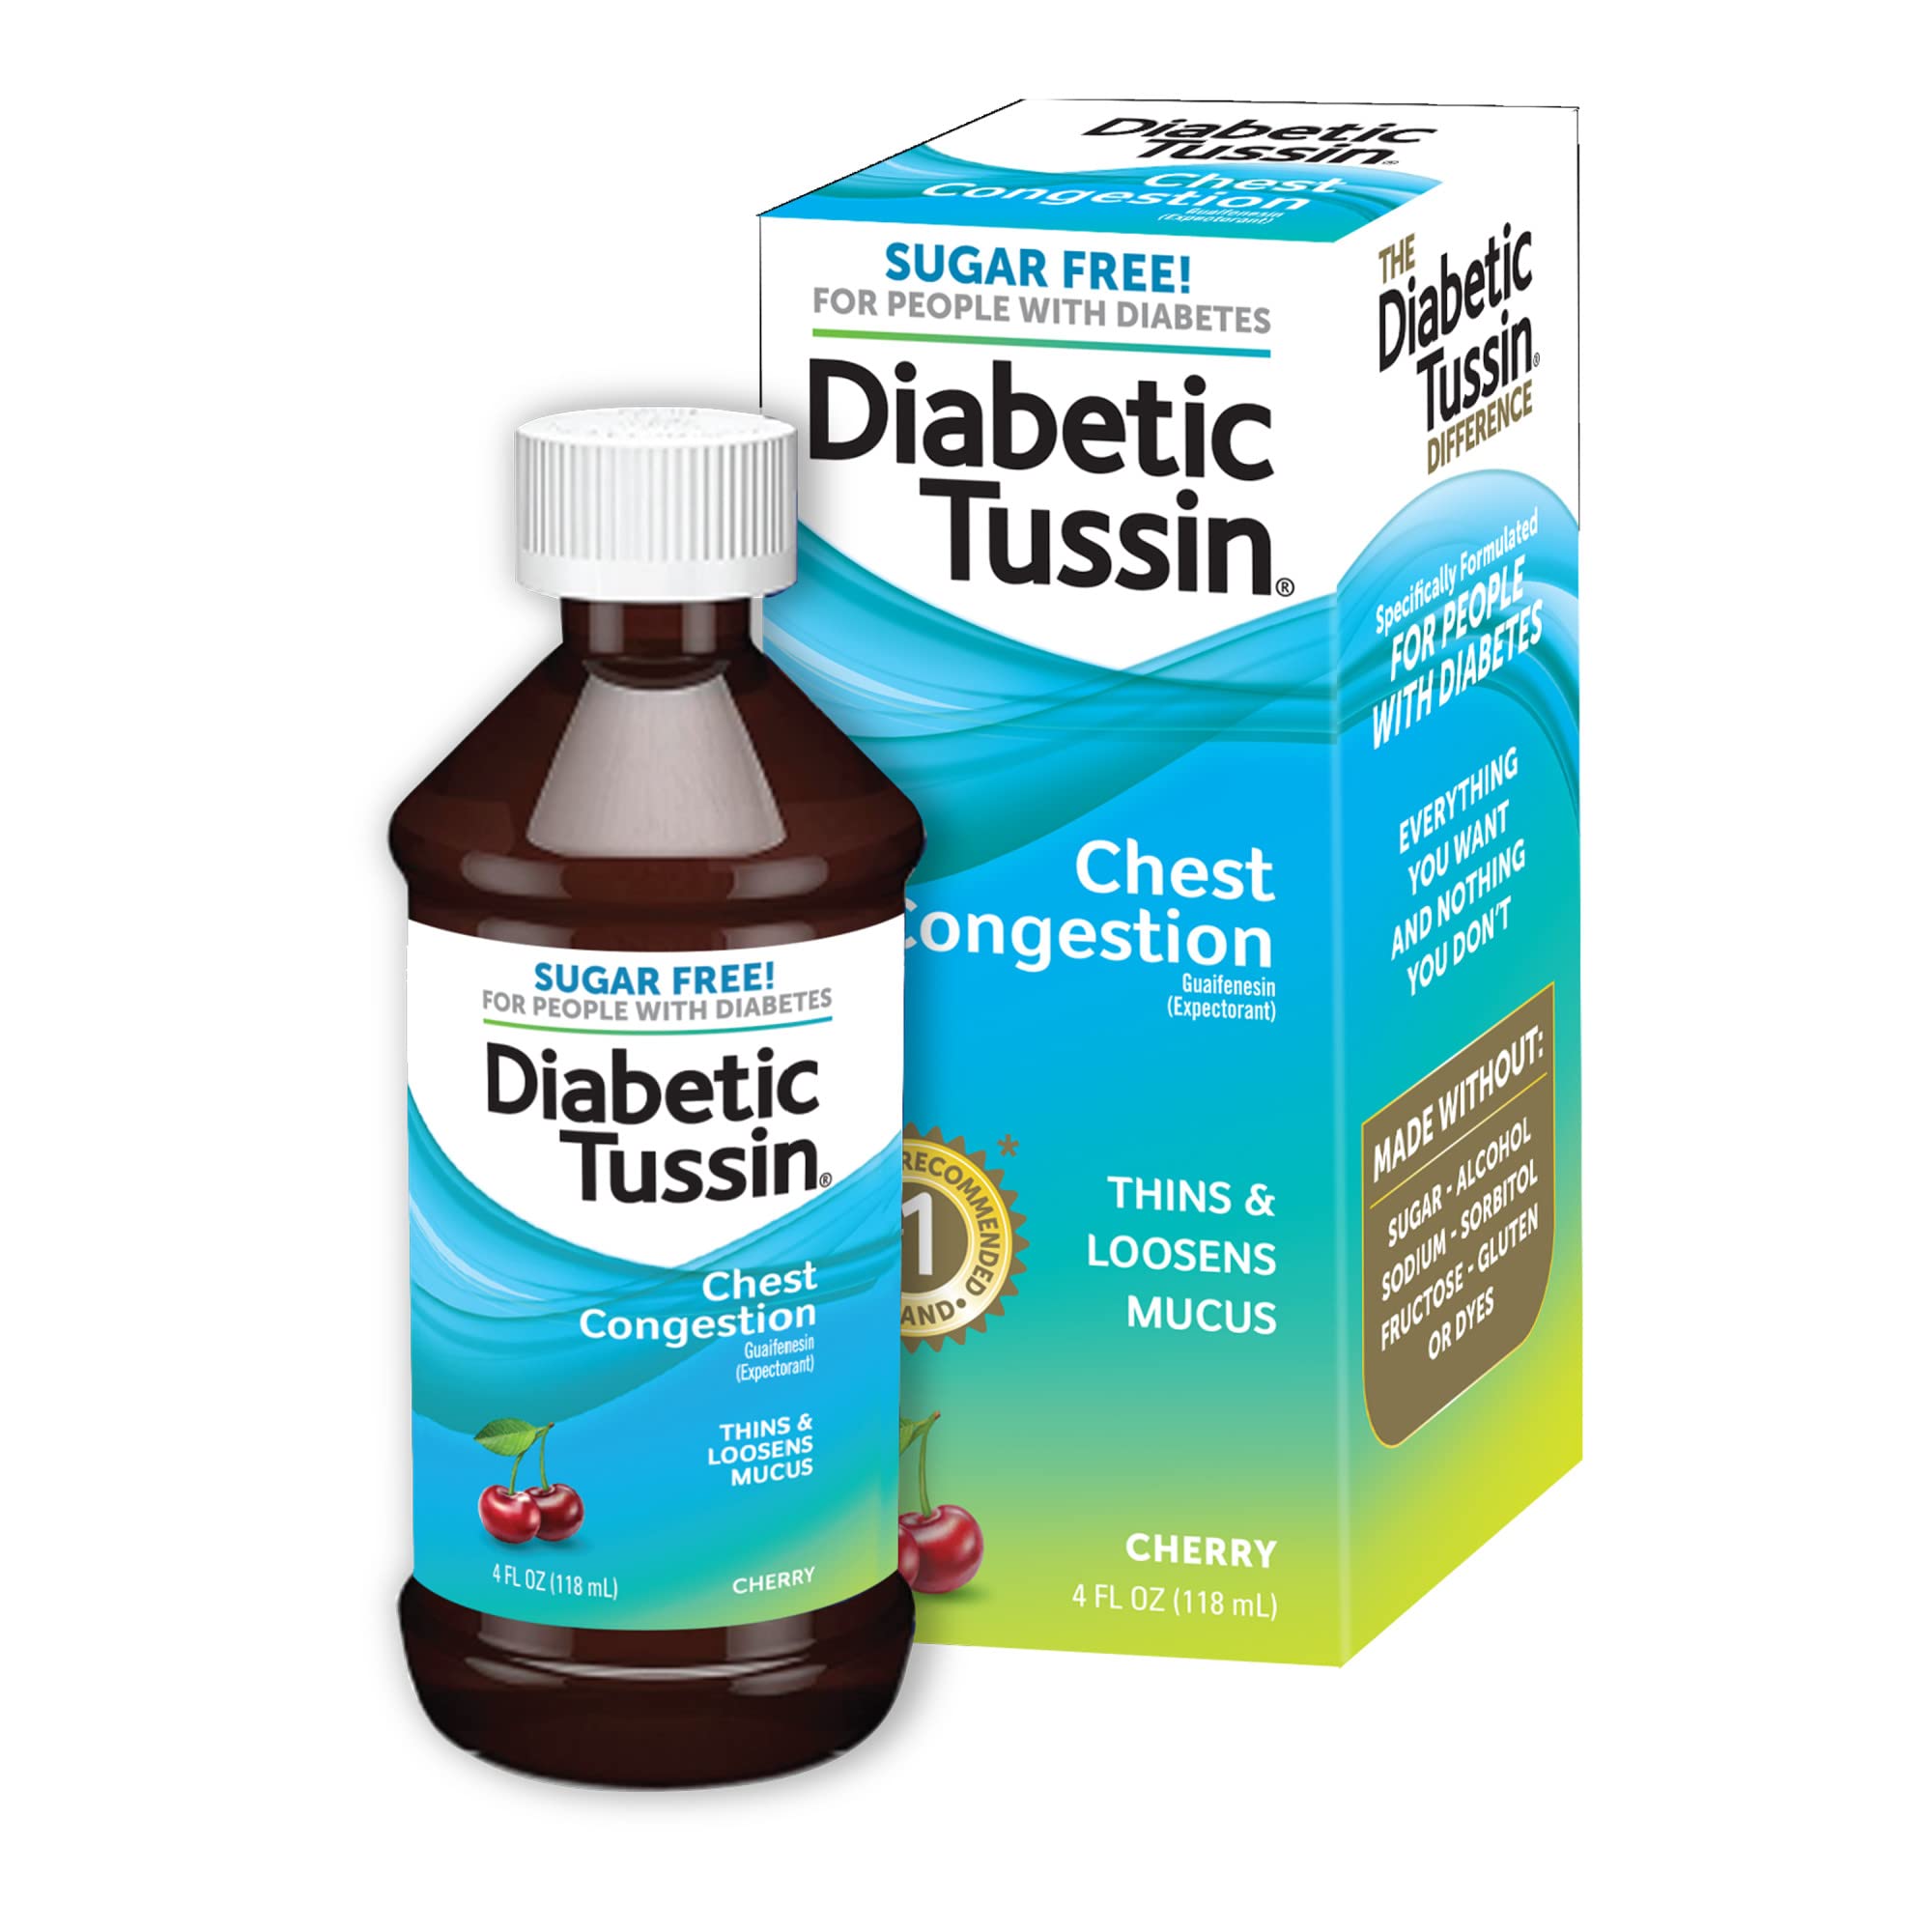 Diabetic Tussin Chest Congestion Relief - 4 Fl oz - Sugar Free Liquid Chest Congestion Medicine, Safe for Diabetics, Cherry Flavored